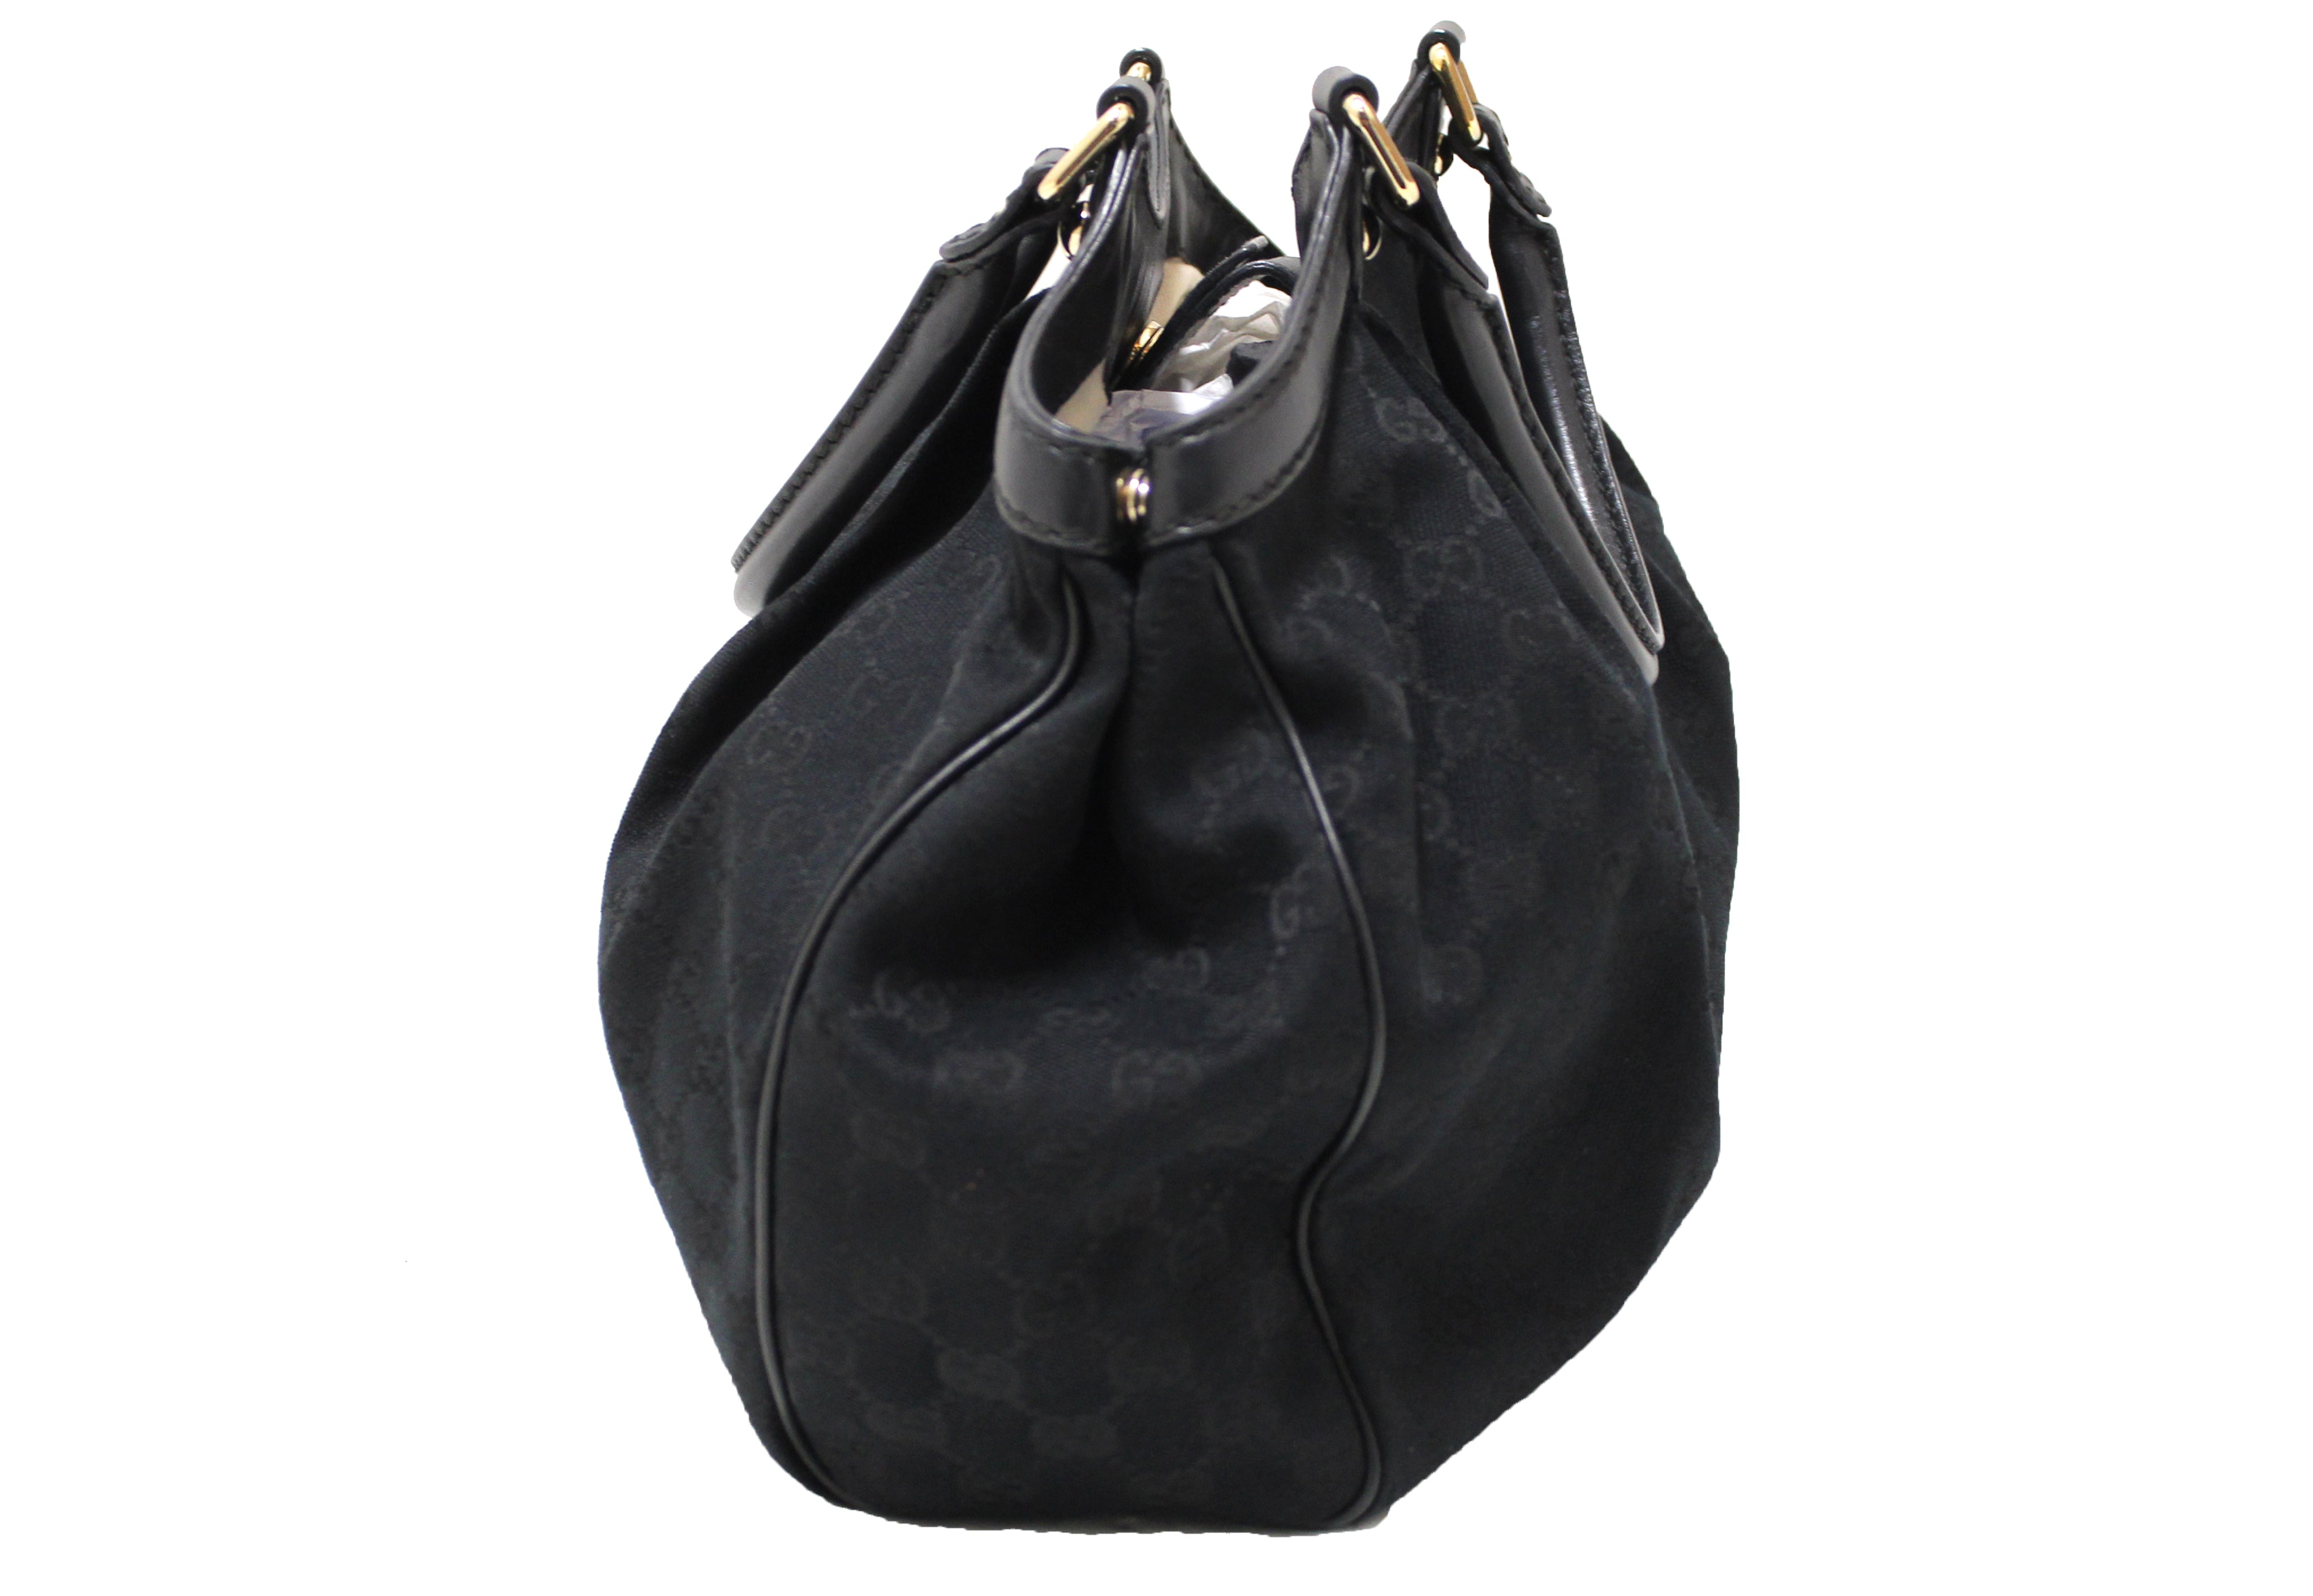 Authentic GUCCI GG Supreme Monogram Canvas Leather Tote Bag Hand Bag Gray  Black